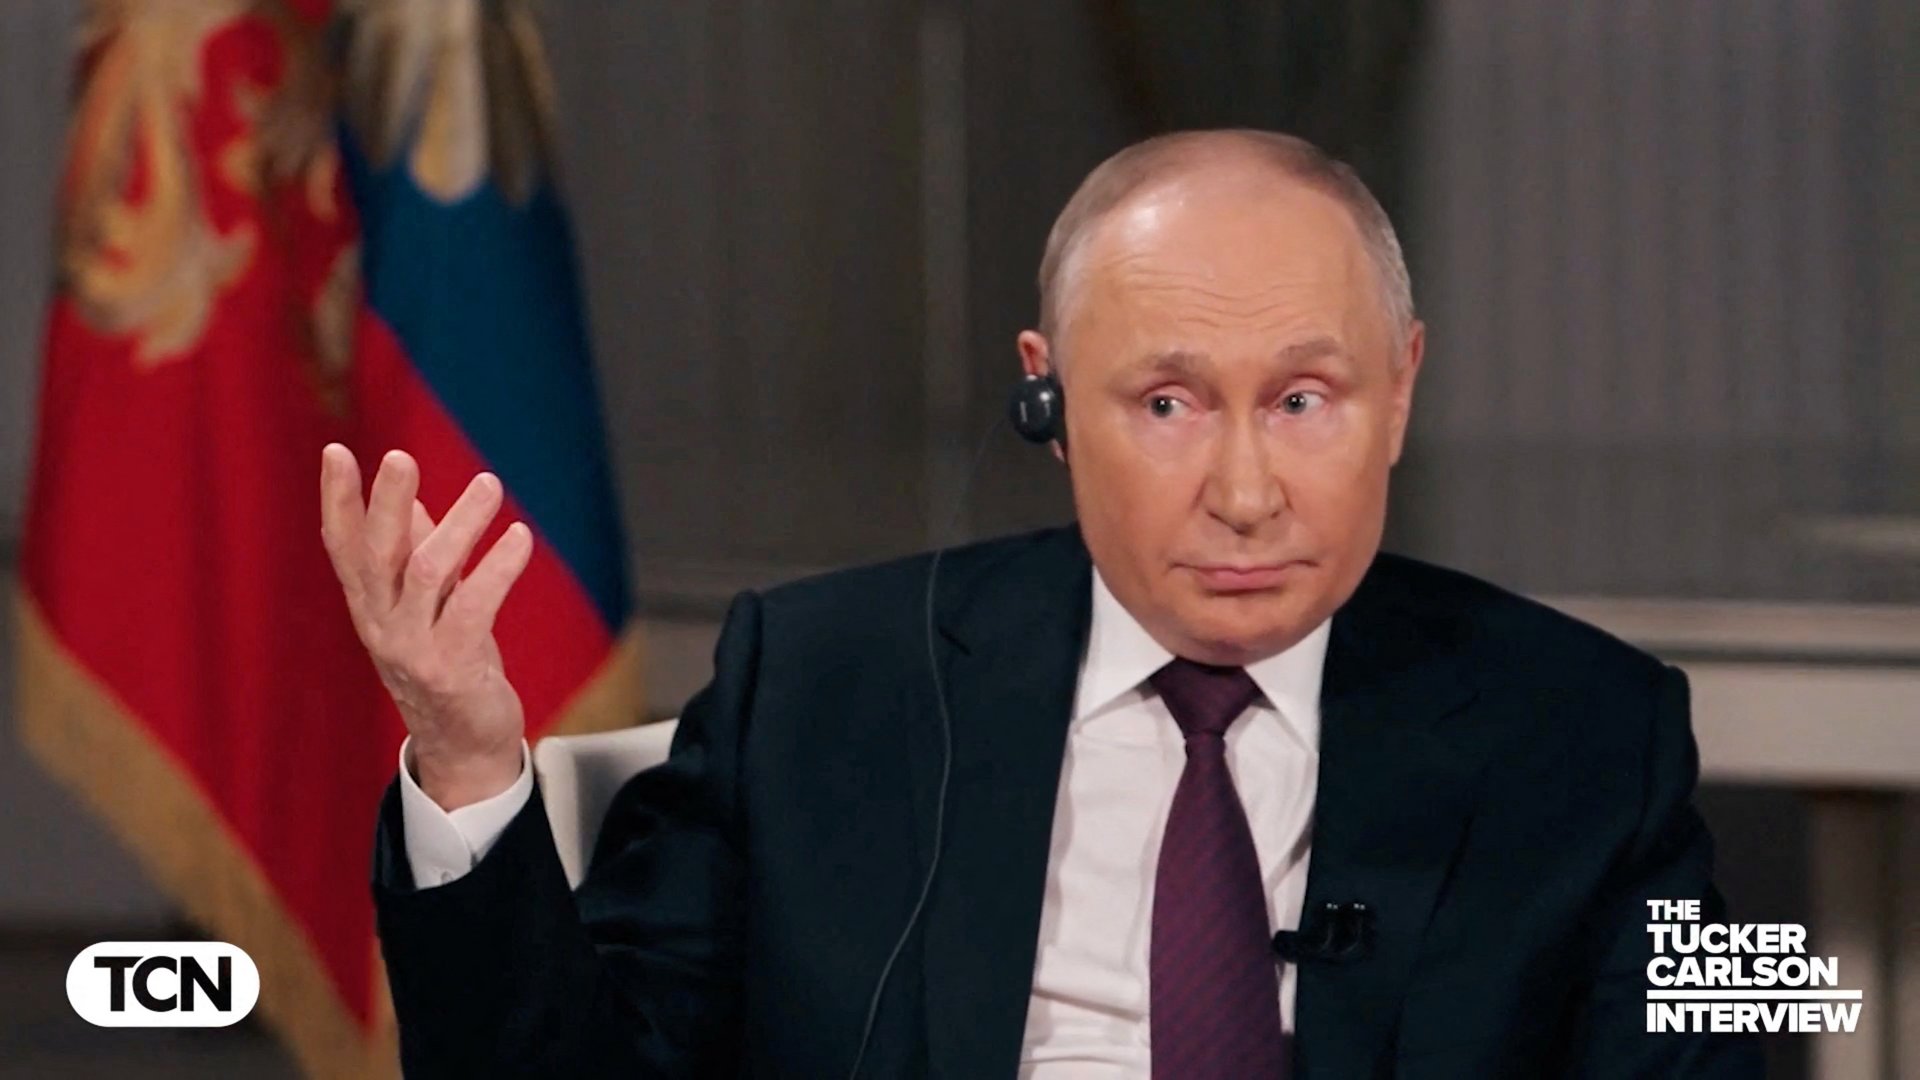 image Russia has no interest in wider war Putin tells former Fox News host Tucker Carlson